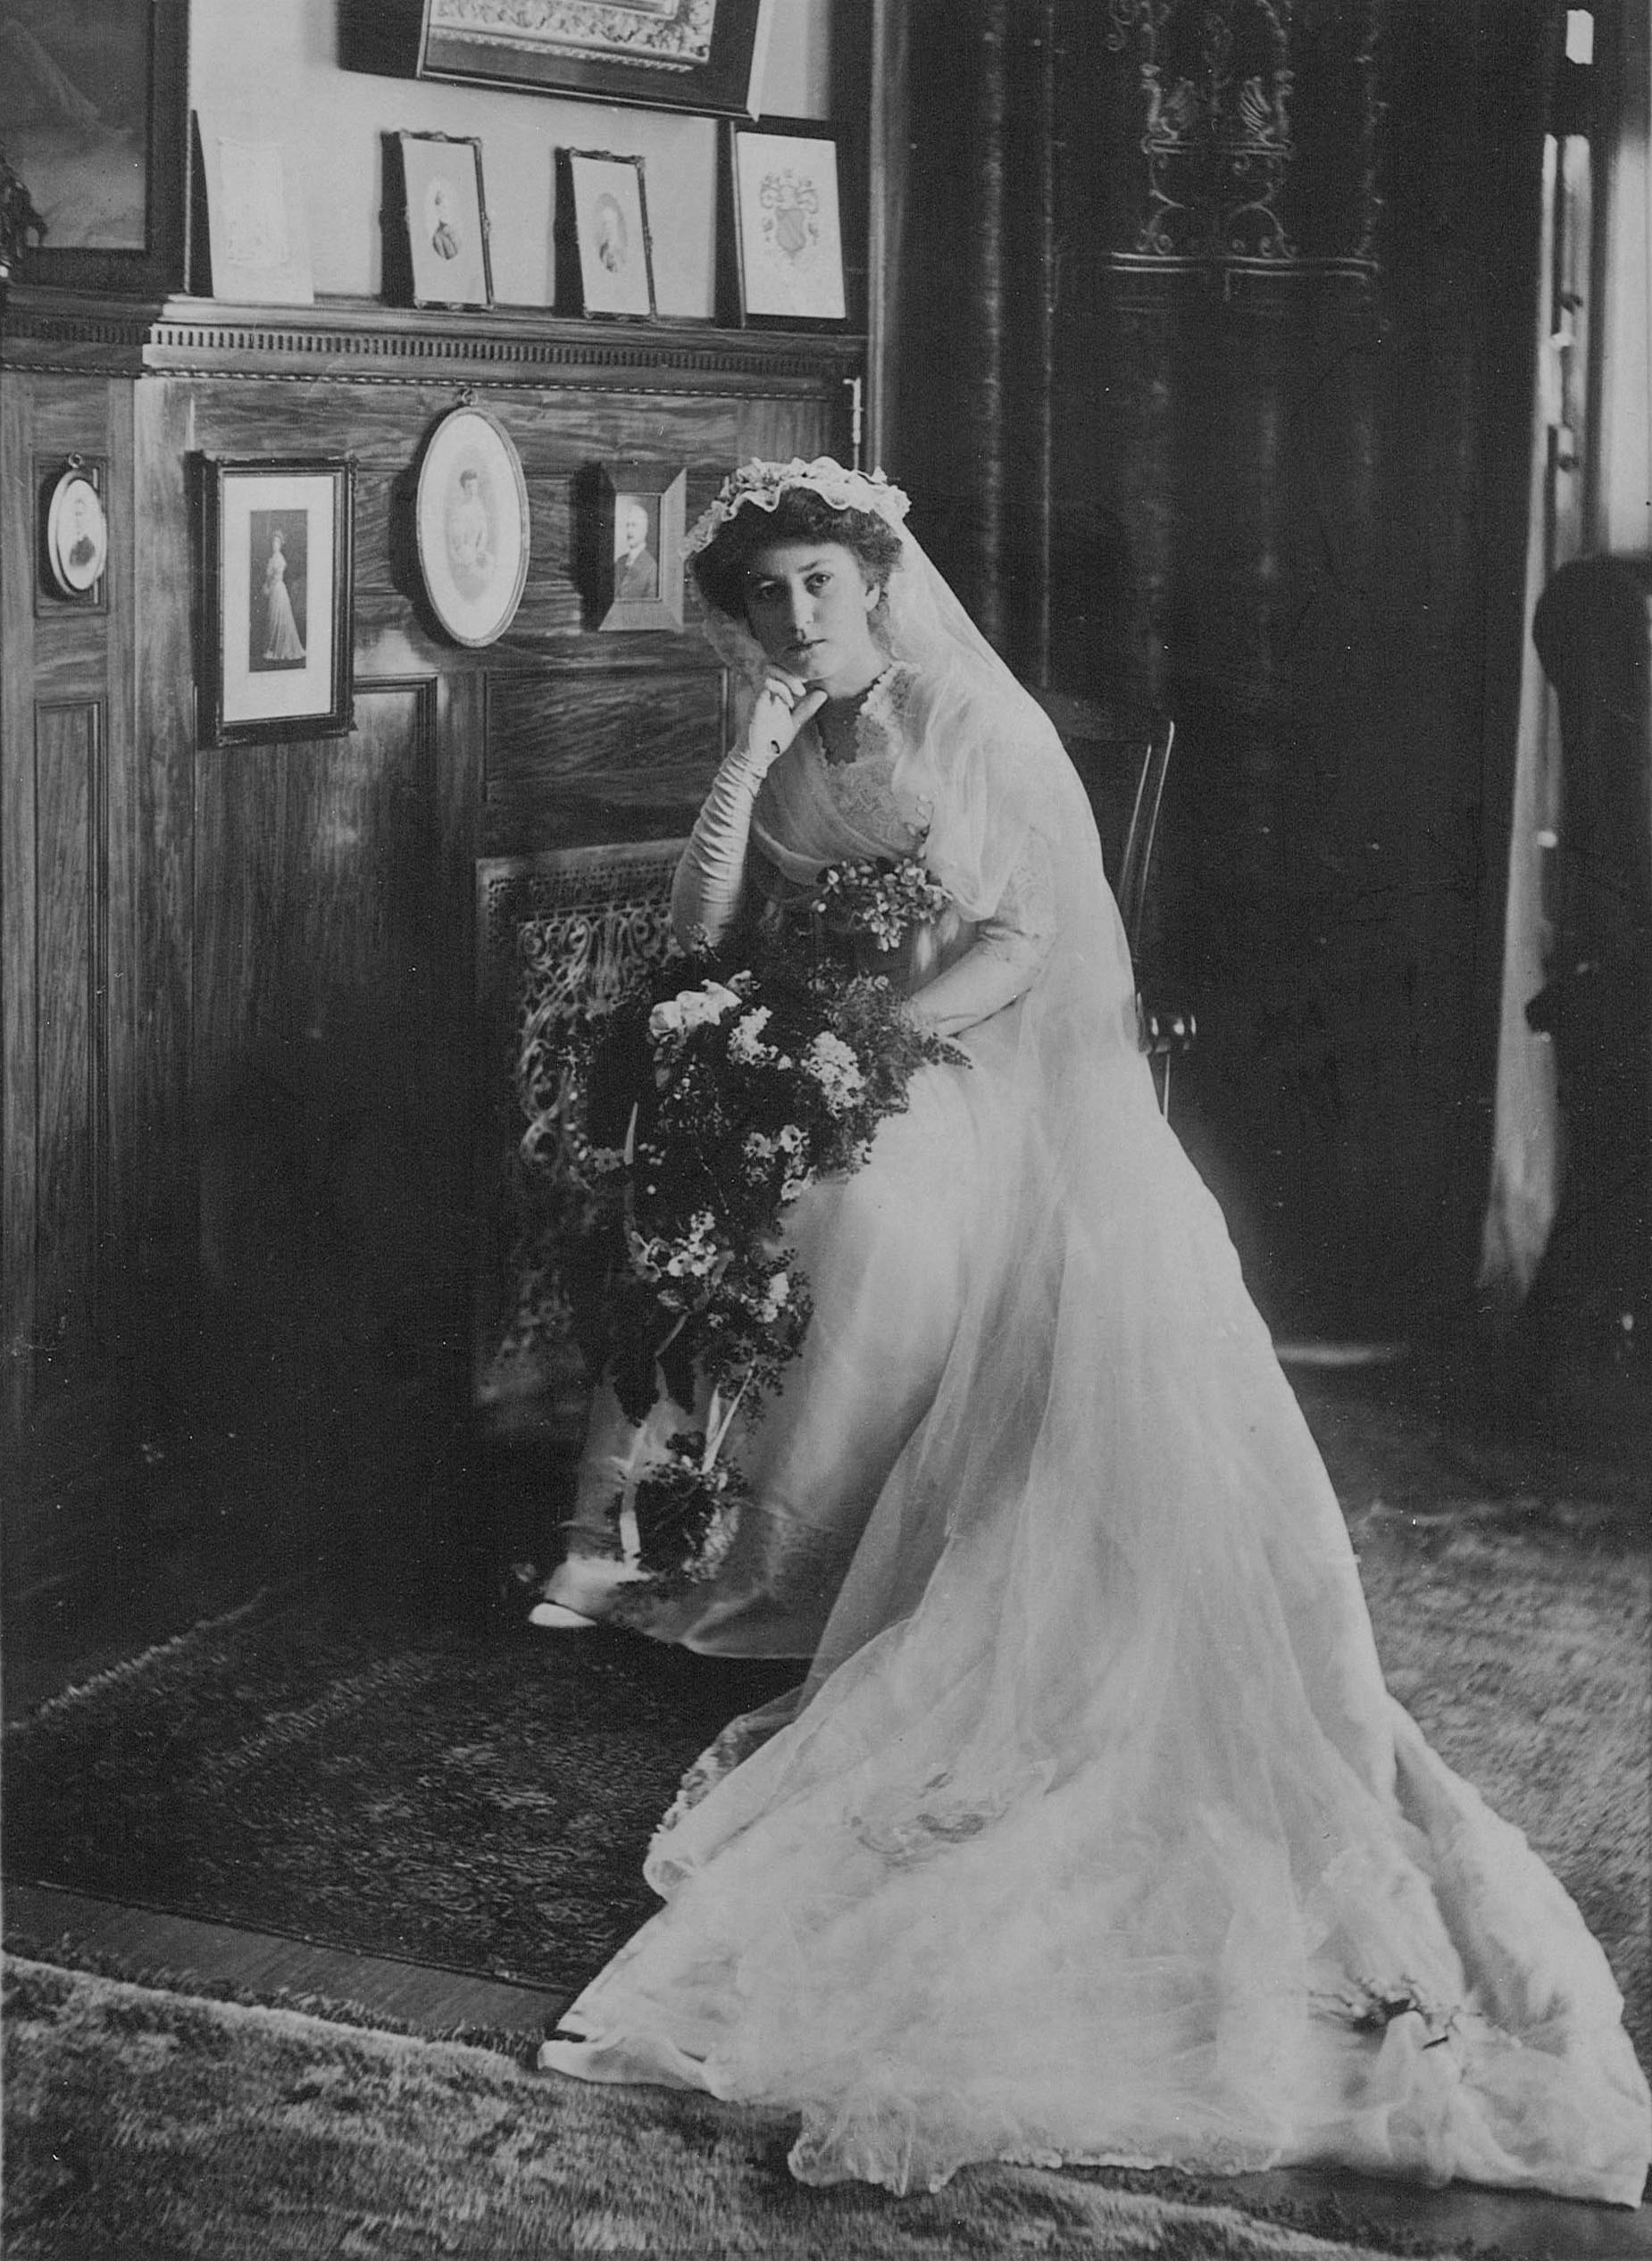 Winnie in wedding dress